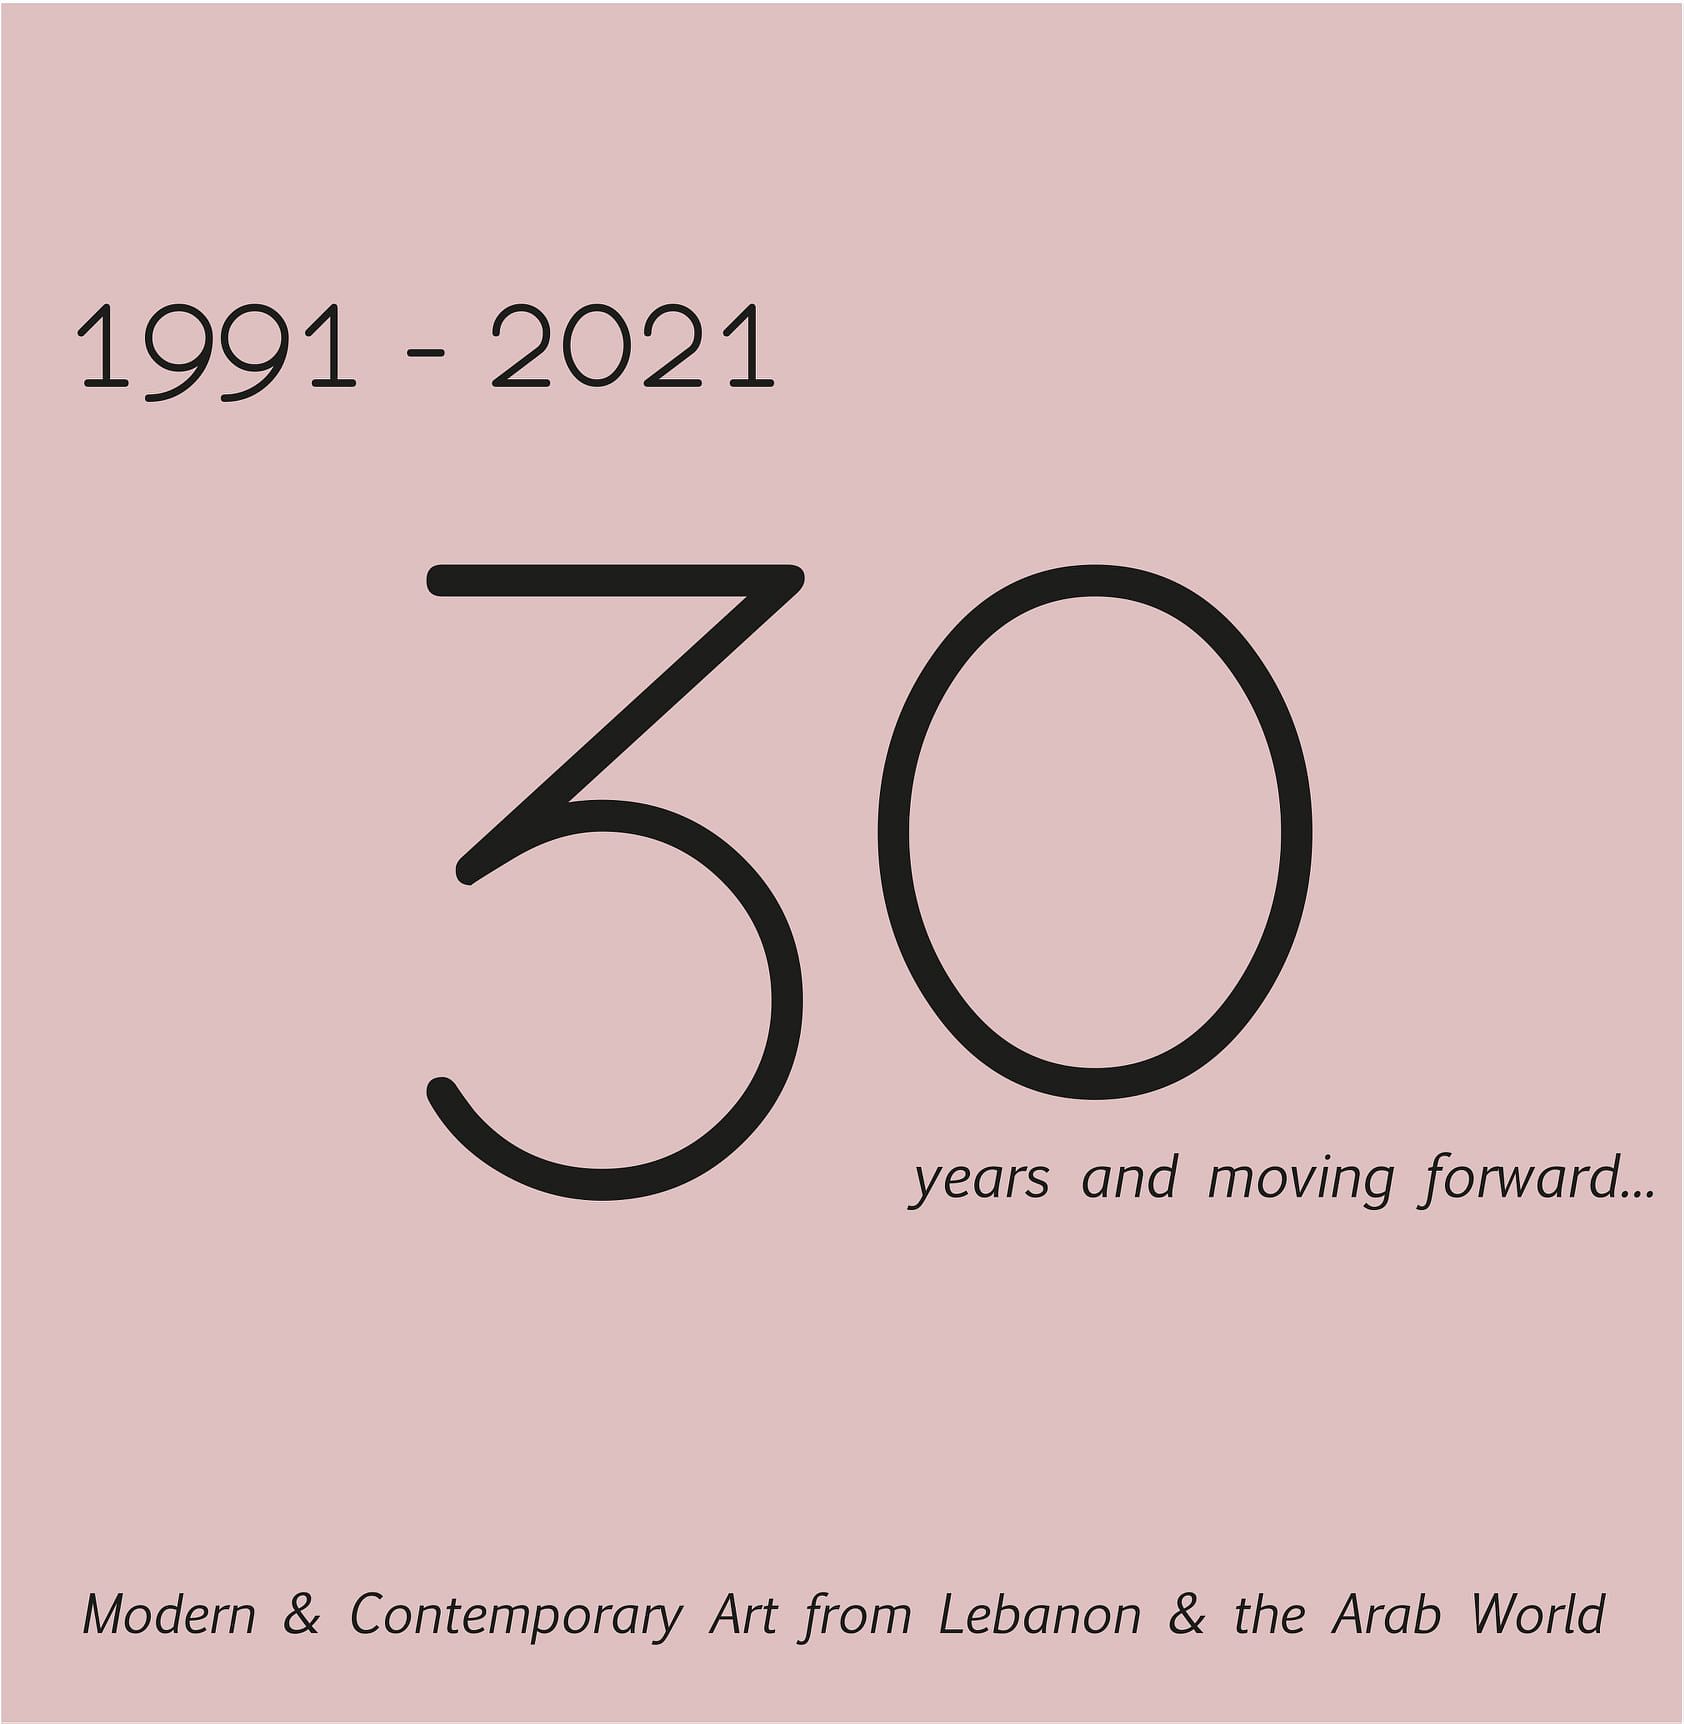 1991-2021
30 Years and moving forward thumbnail